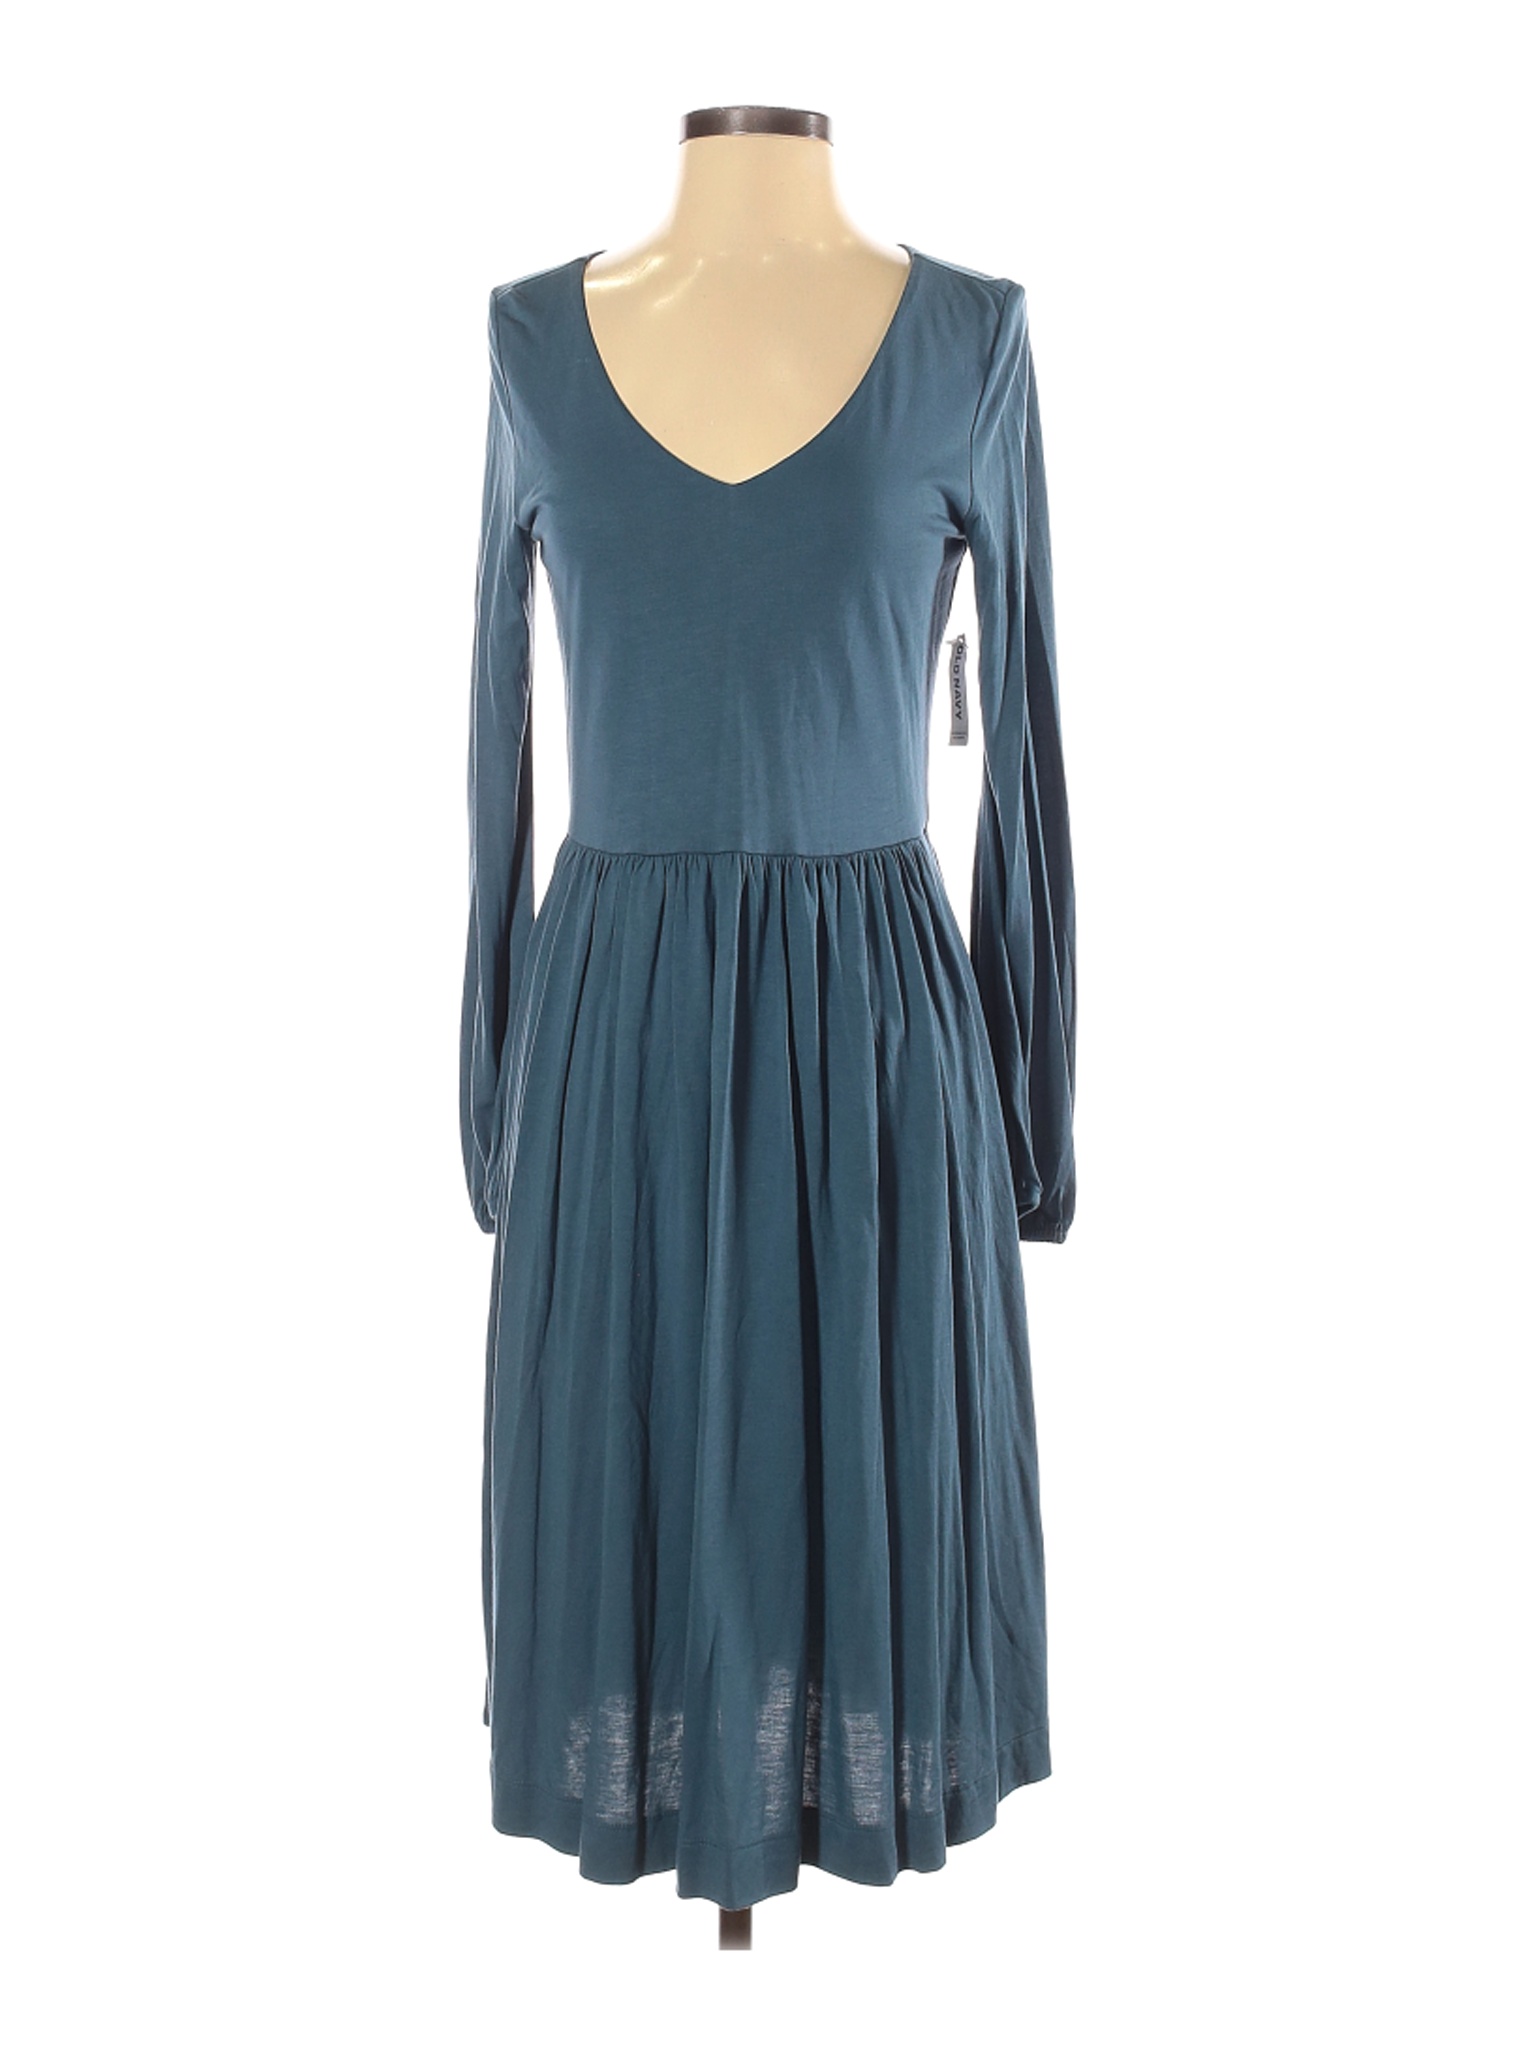 NWT Old Navy Women Green Casual Dress S Tall | eBay